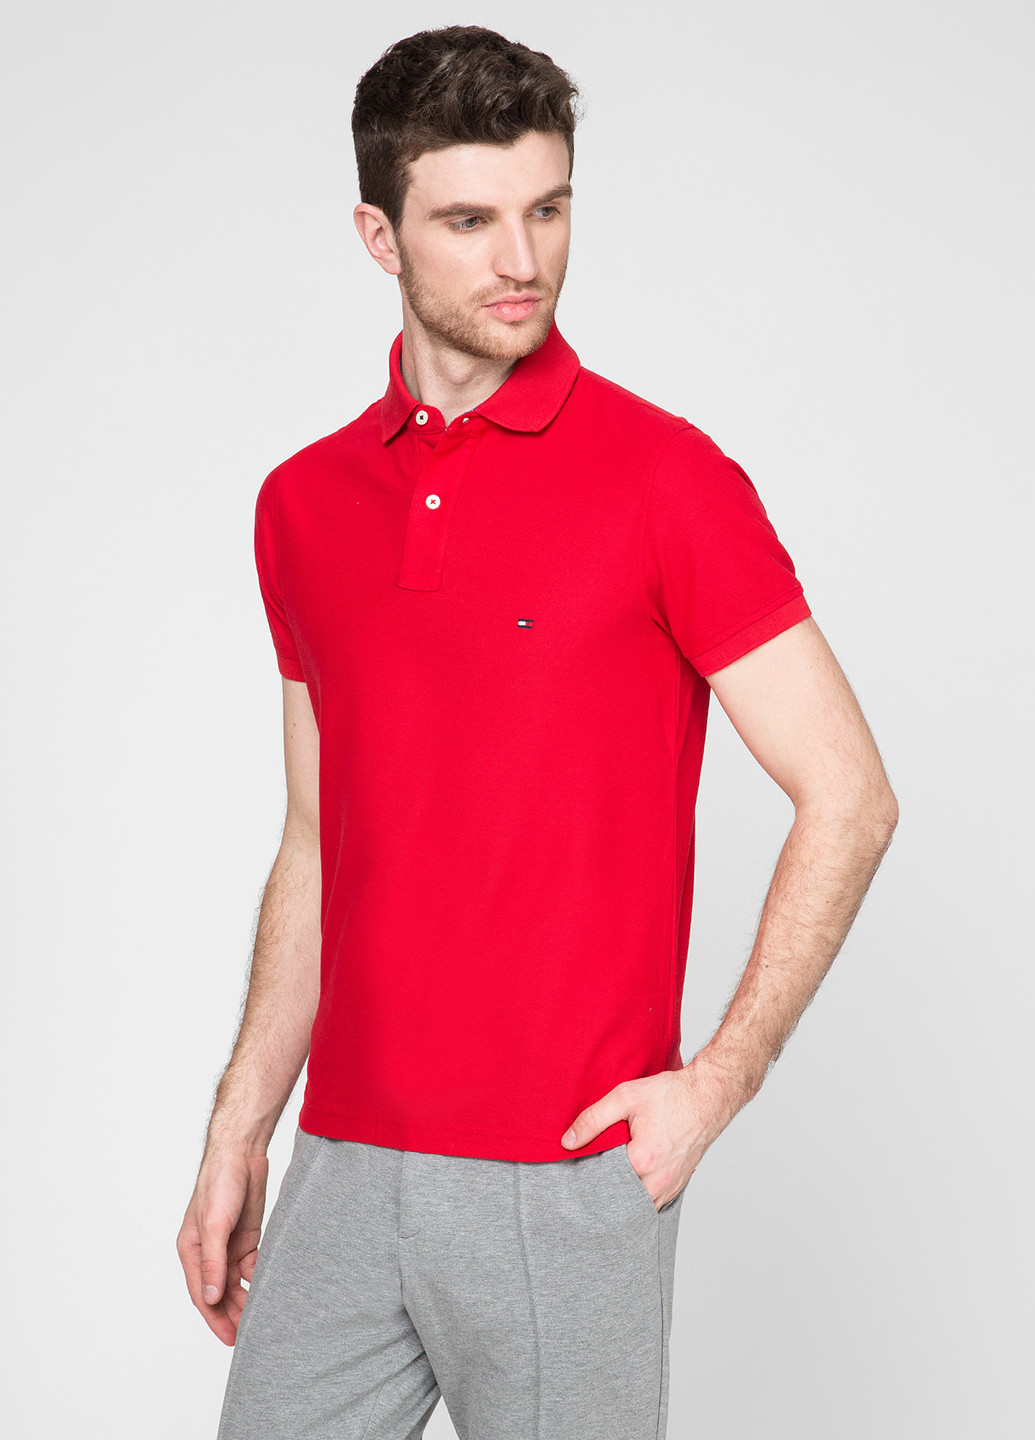 Красная футболка-поло для мужчин Tommy Hilfiger однотонная